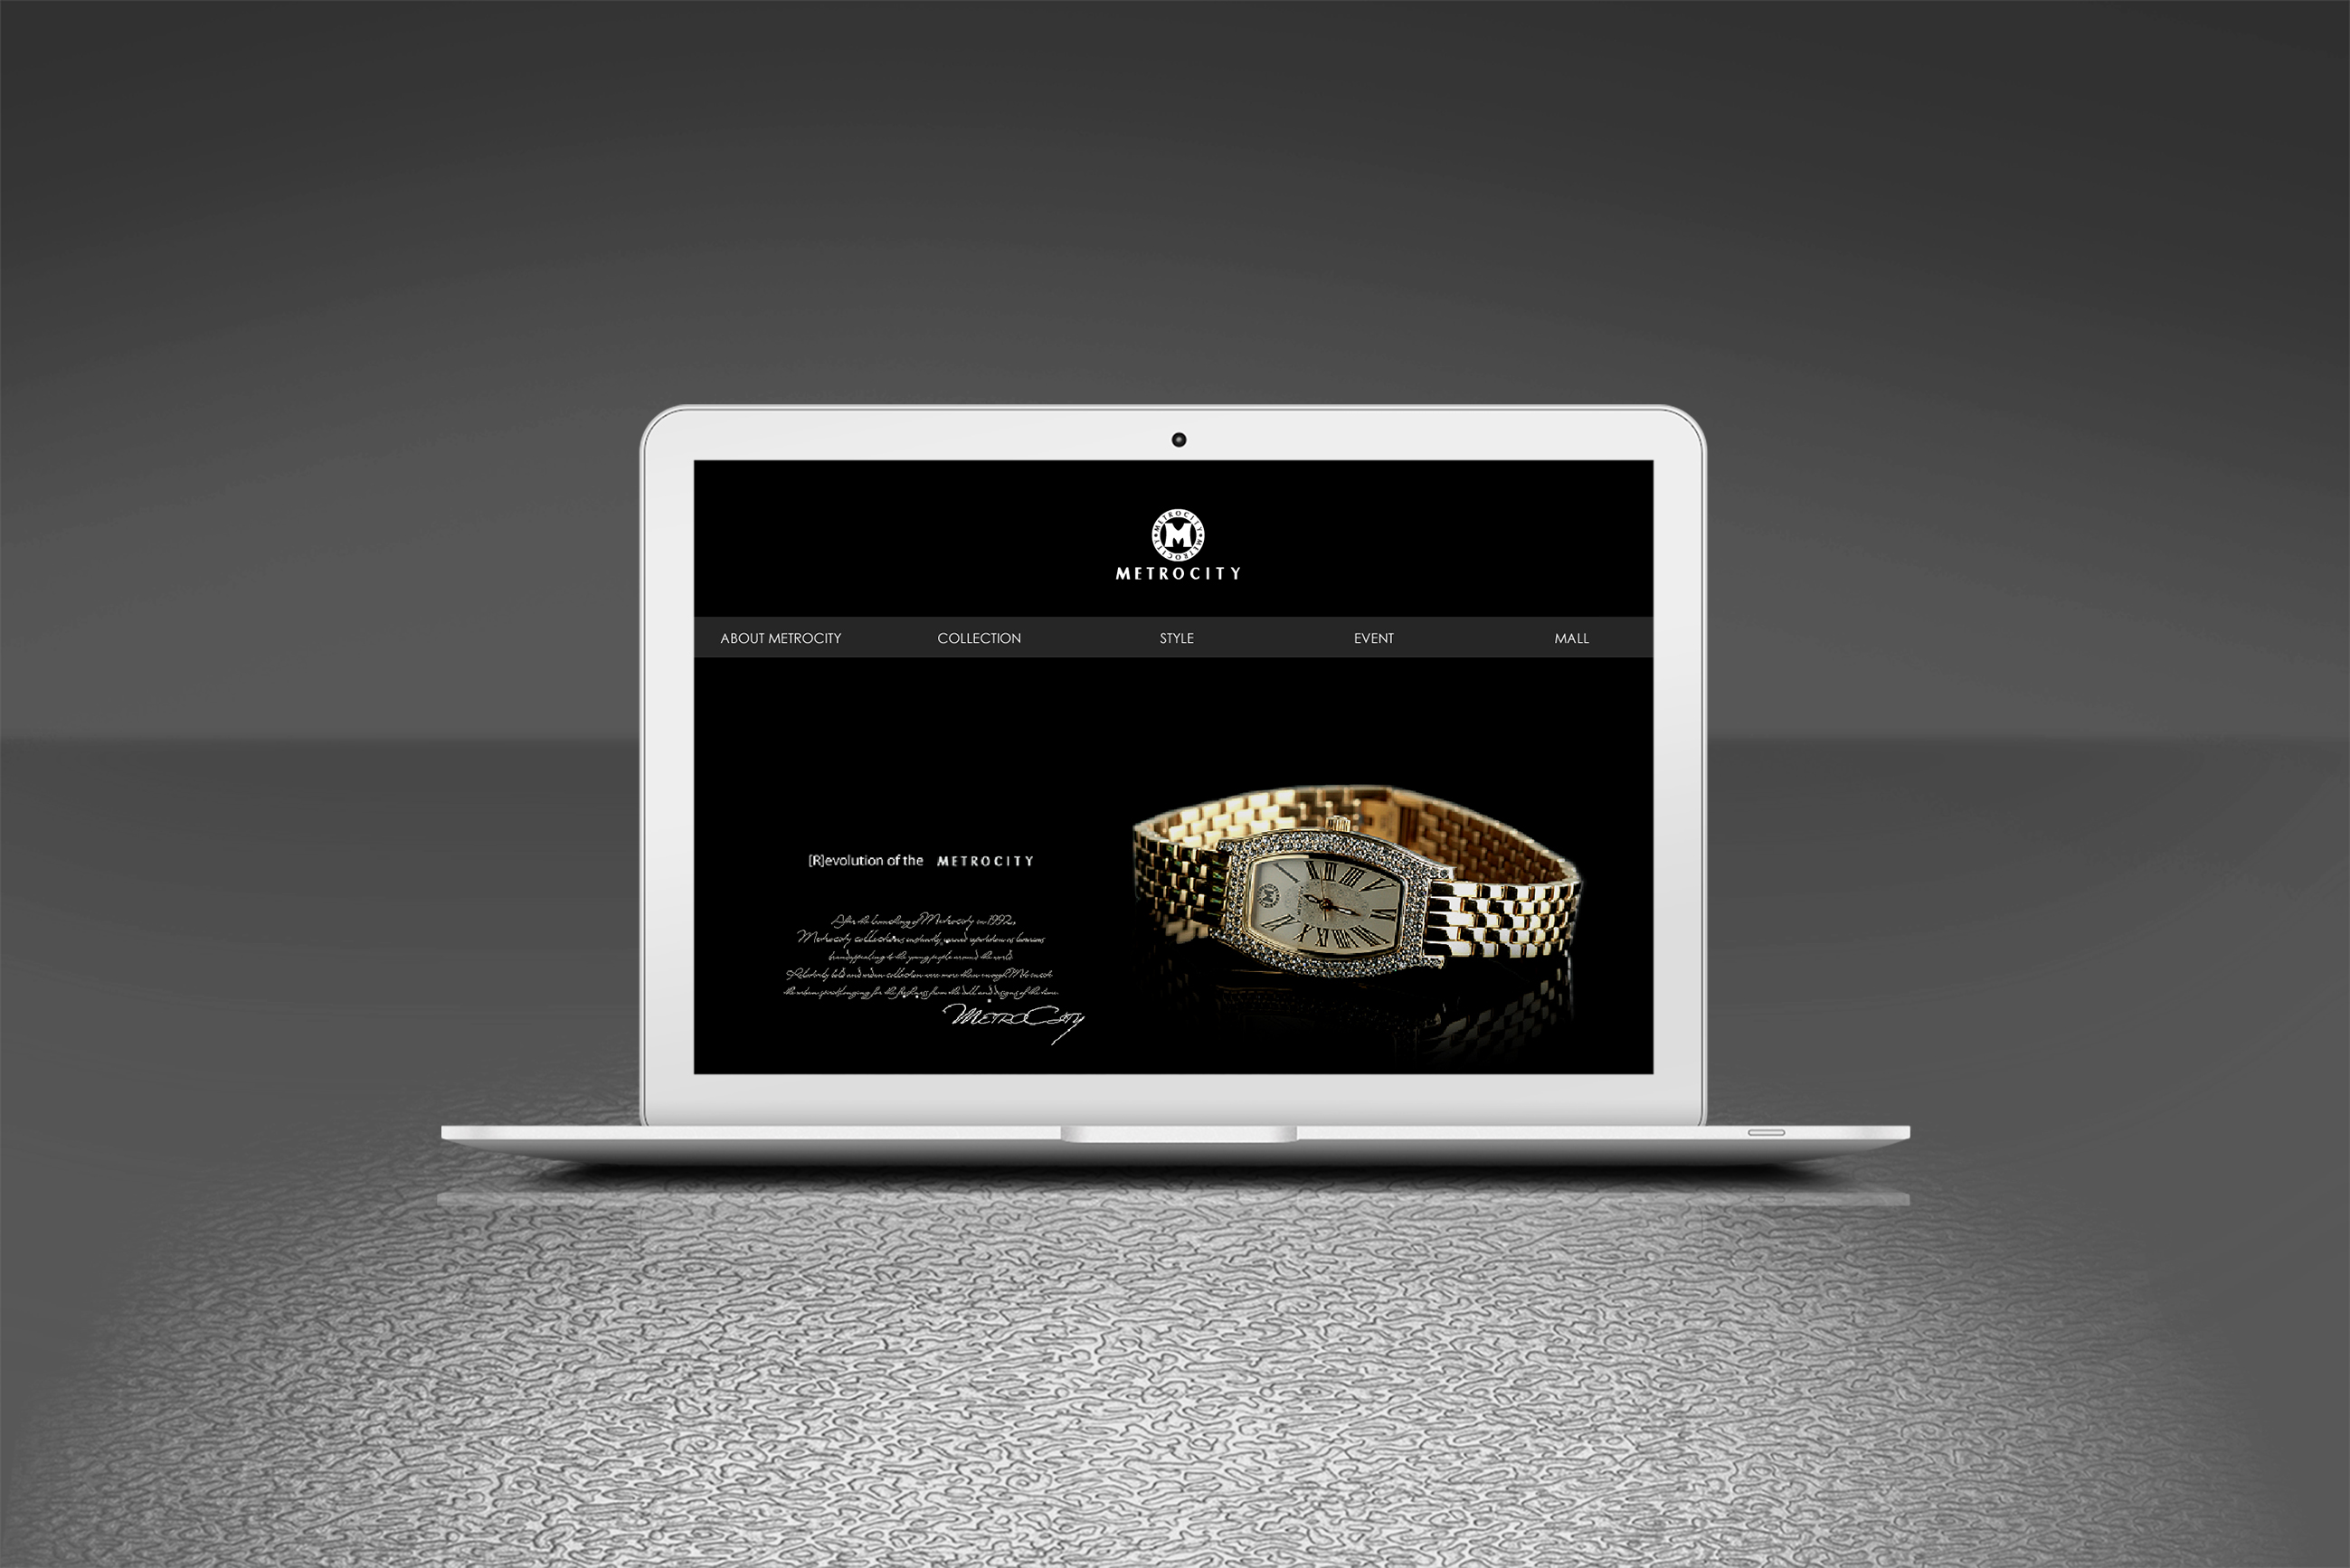 Metrocity Web Site Design Agency - ADDVALUN with Cosline International